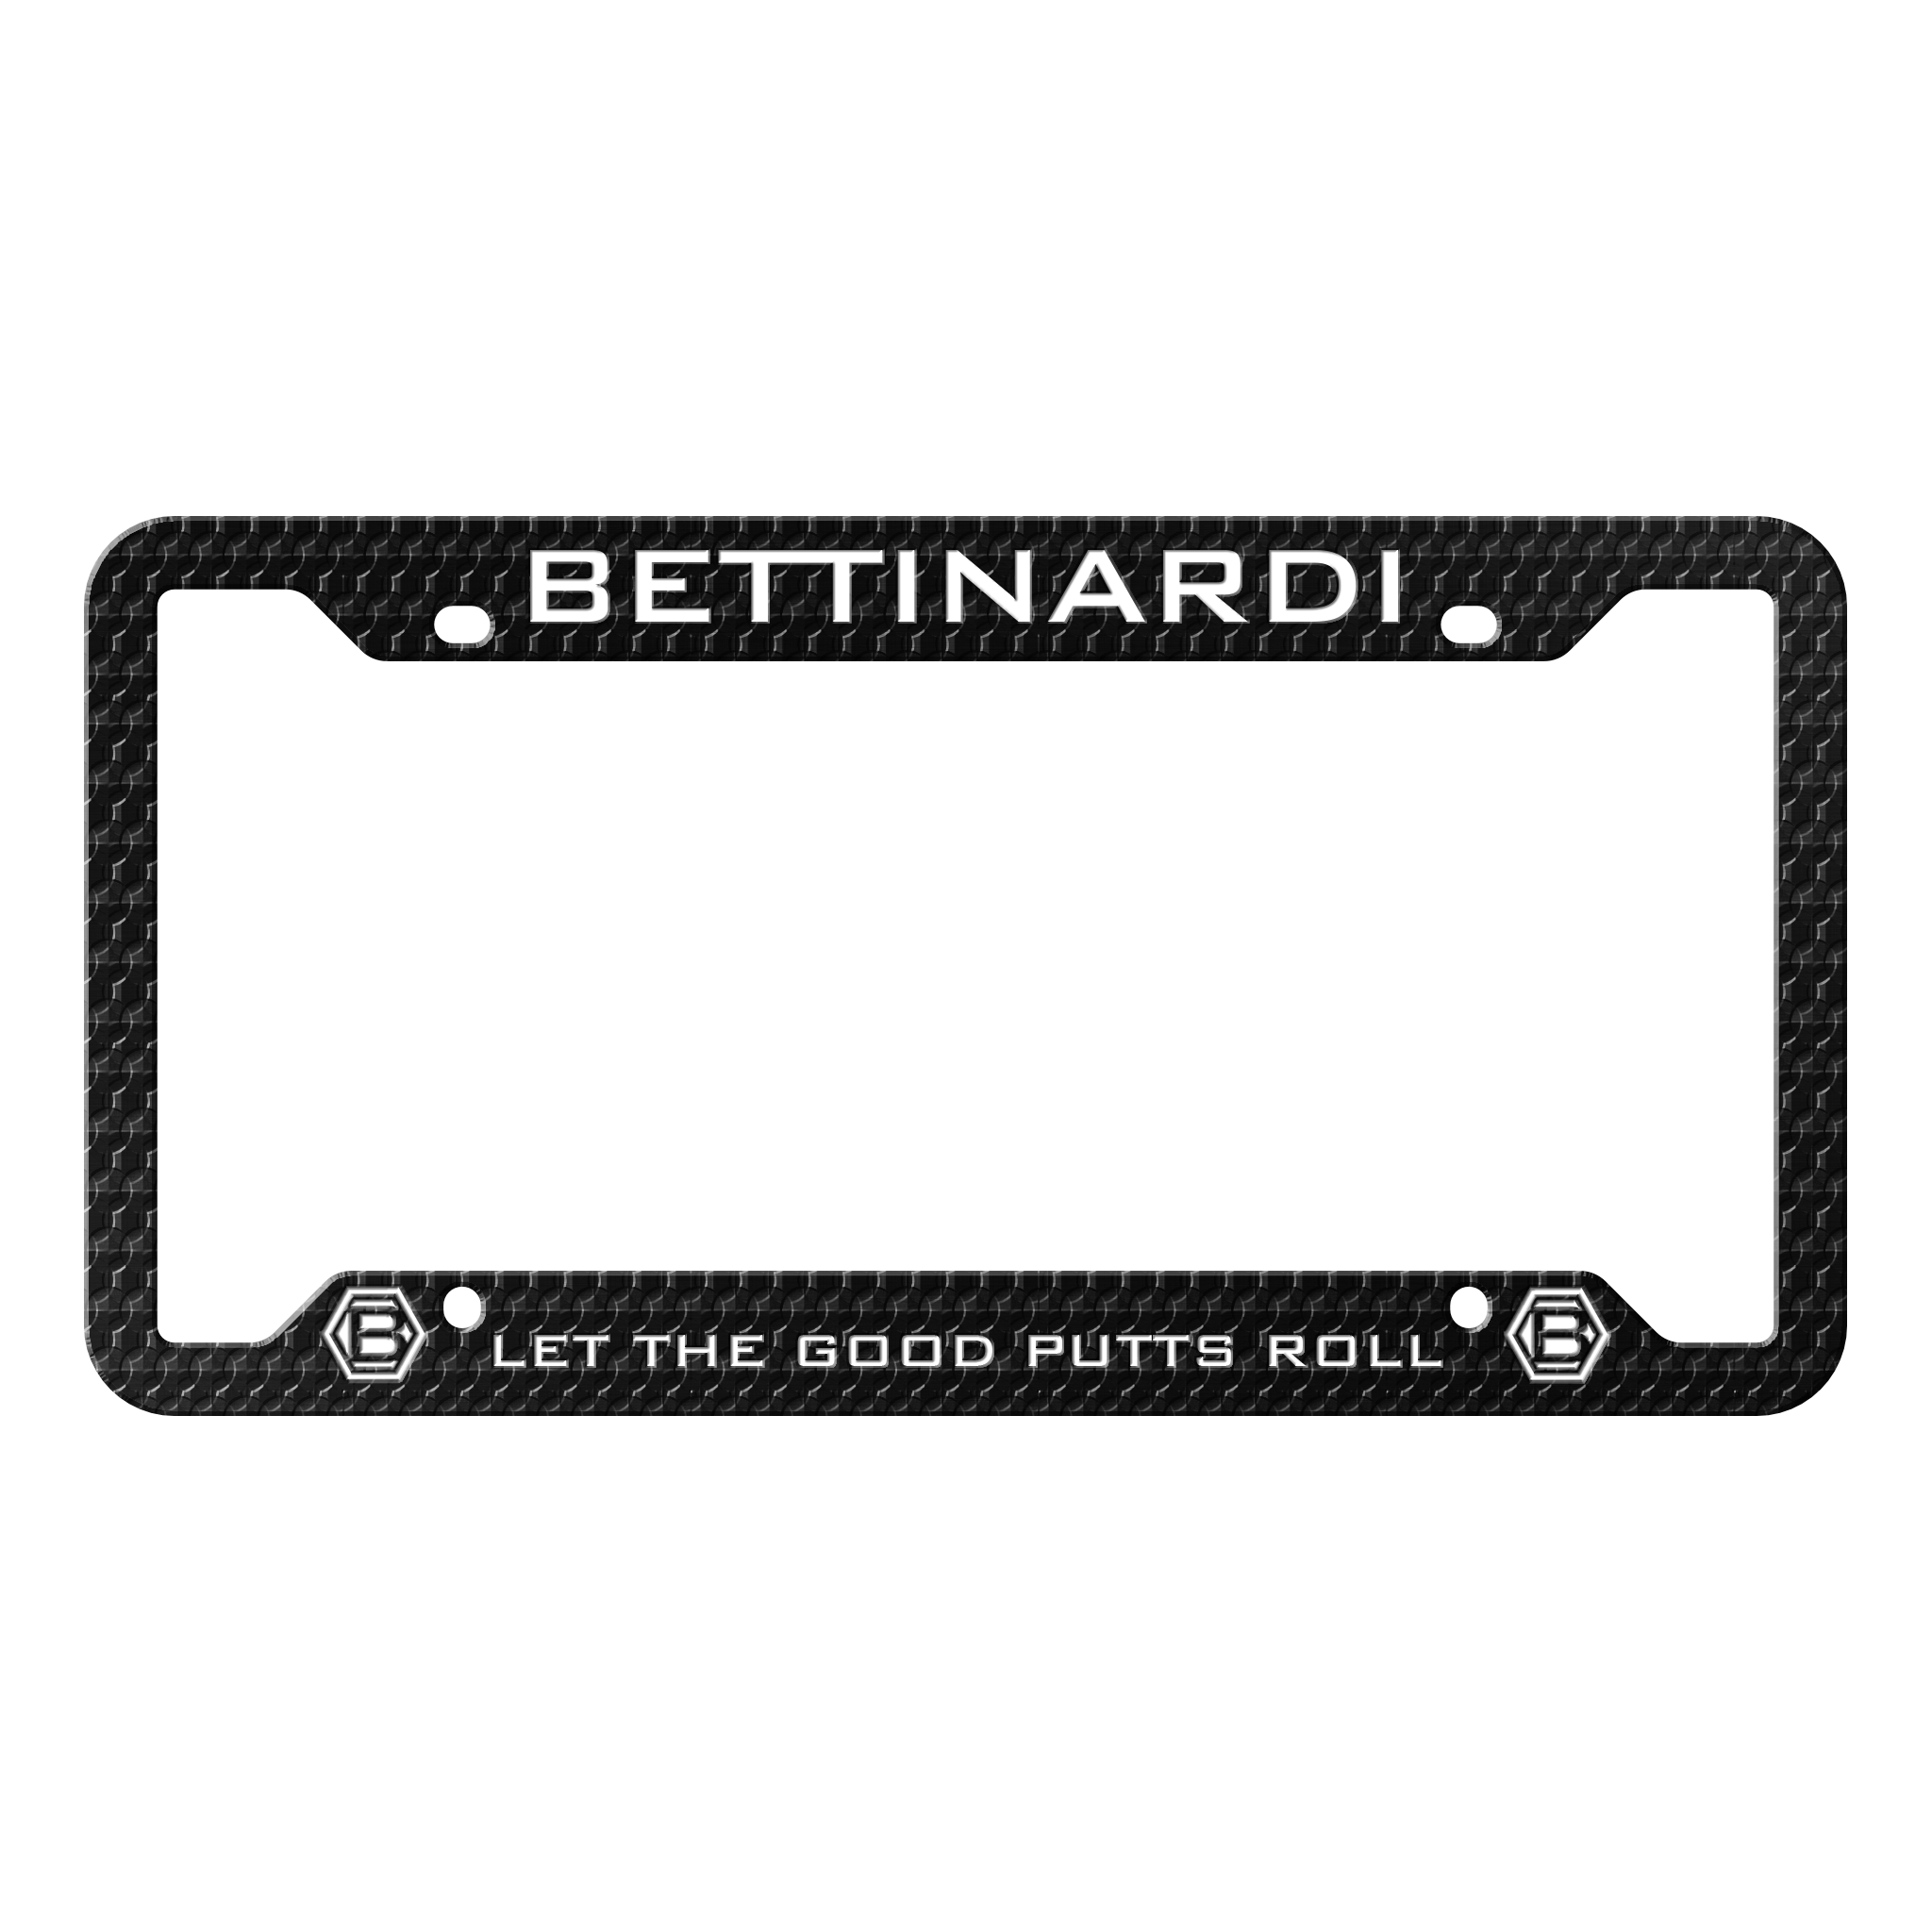 Bettinardi Let the Good Putts Roll License Plate Holder (Black)